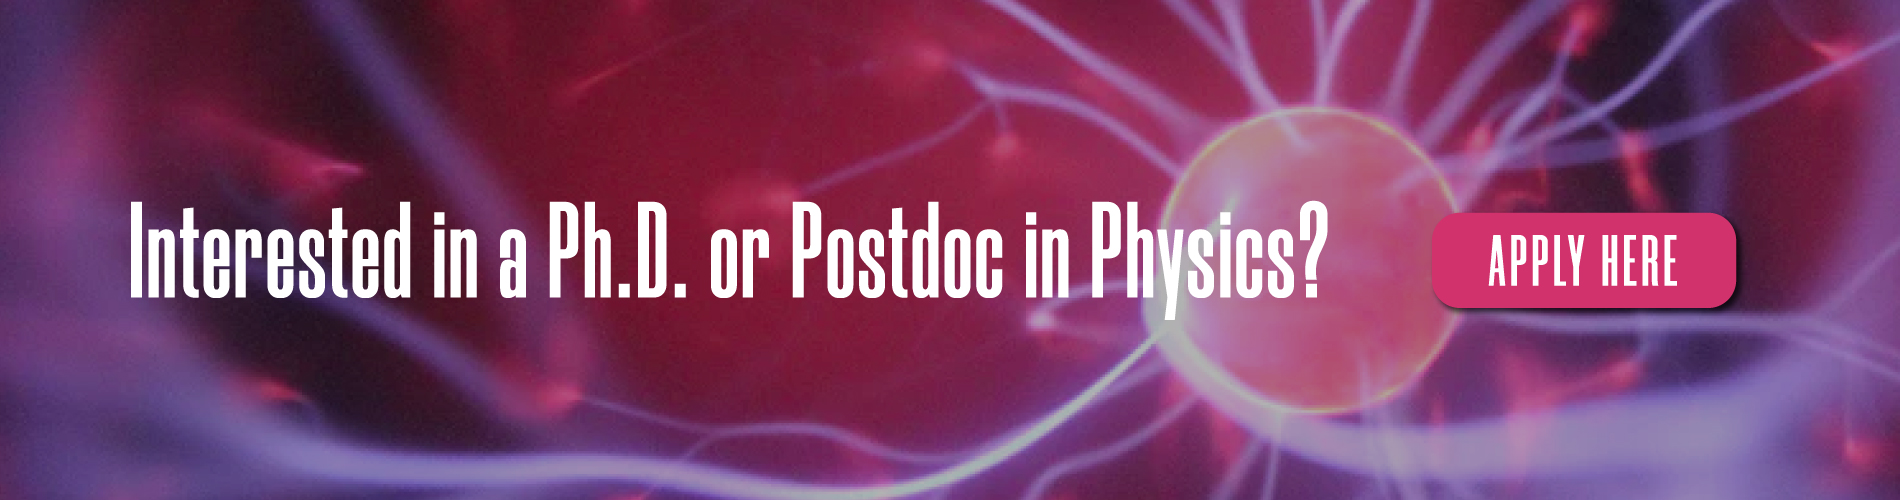 phd physics open positions